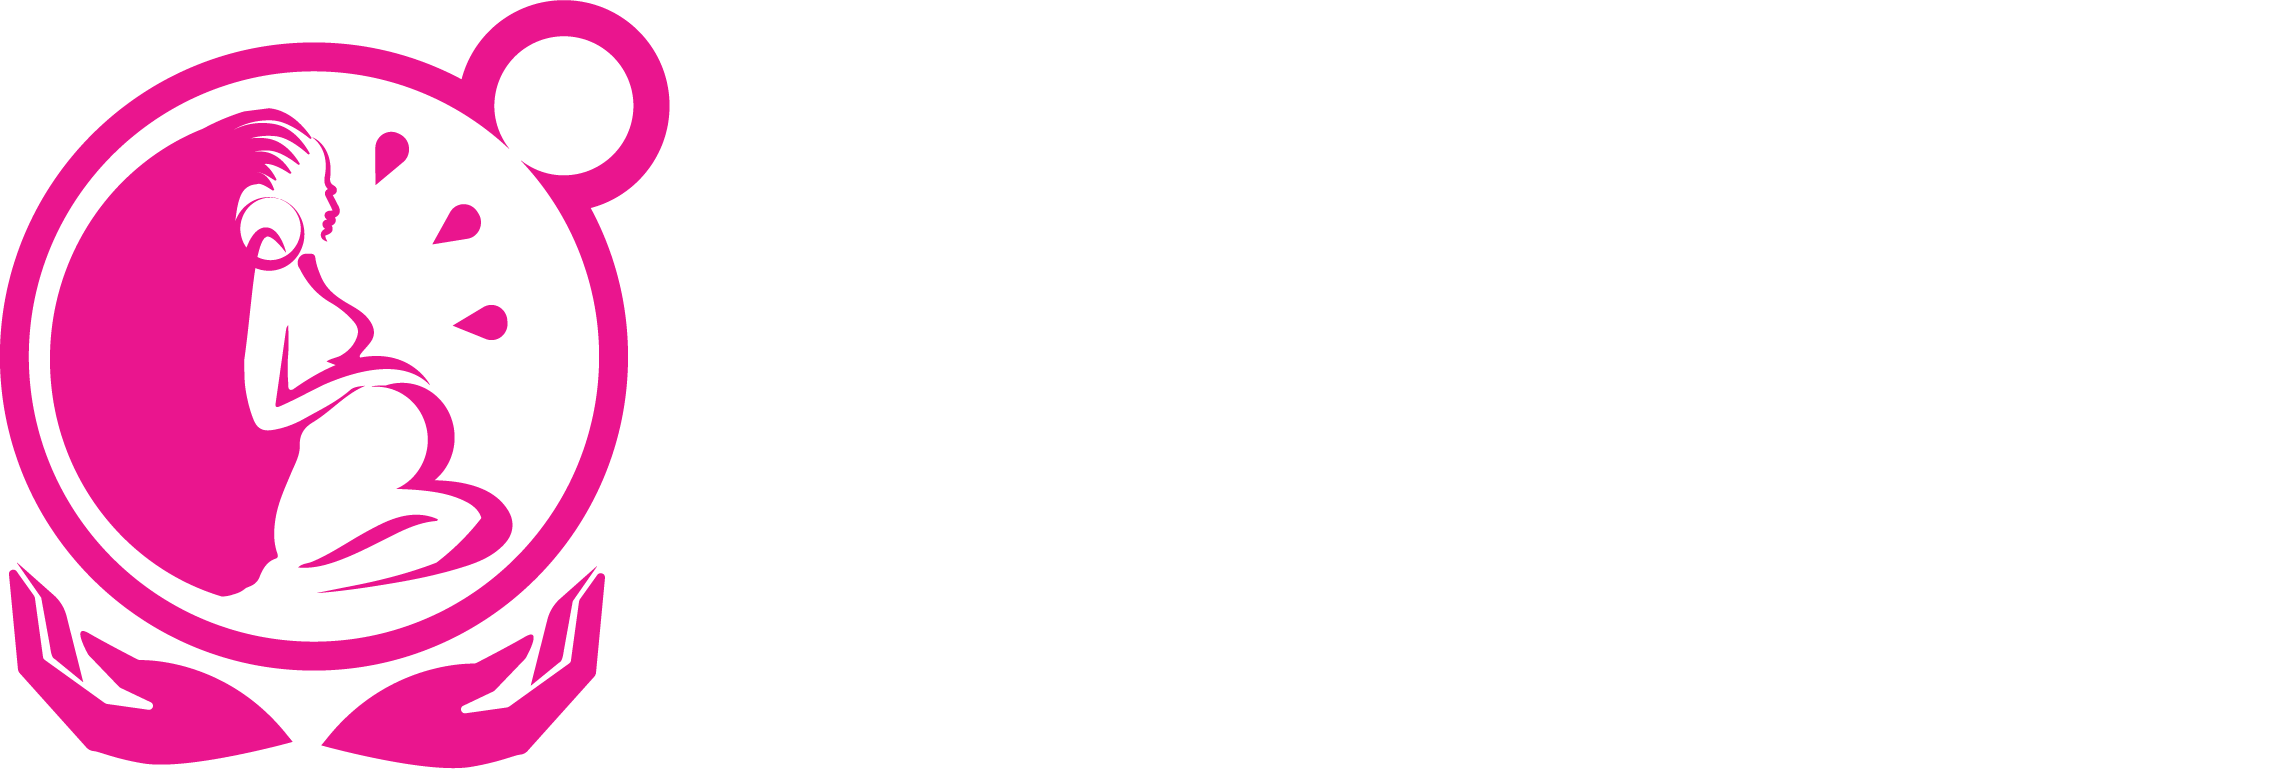 Motherhood Health Care